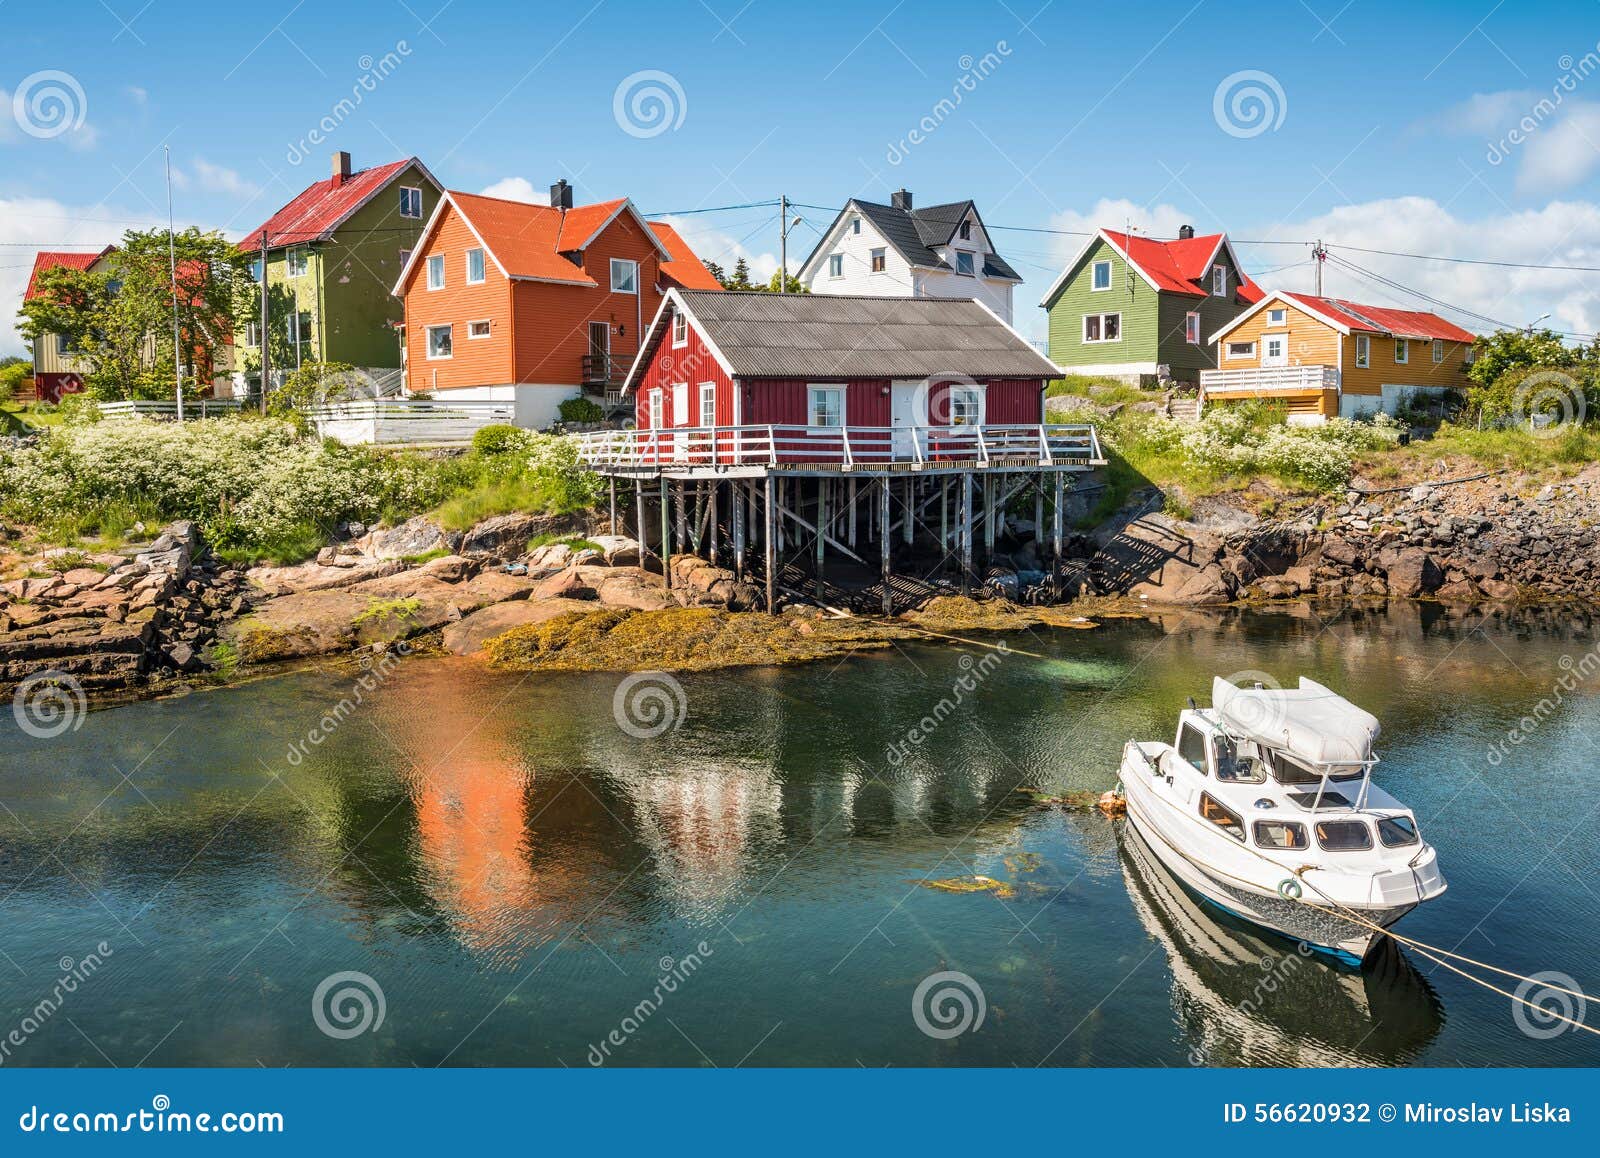 fishing village henningsvaer in lofoten islands, norway